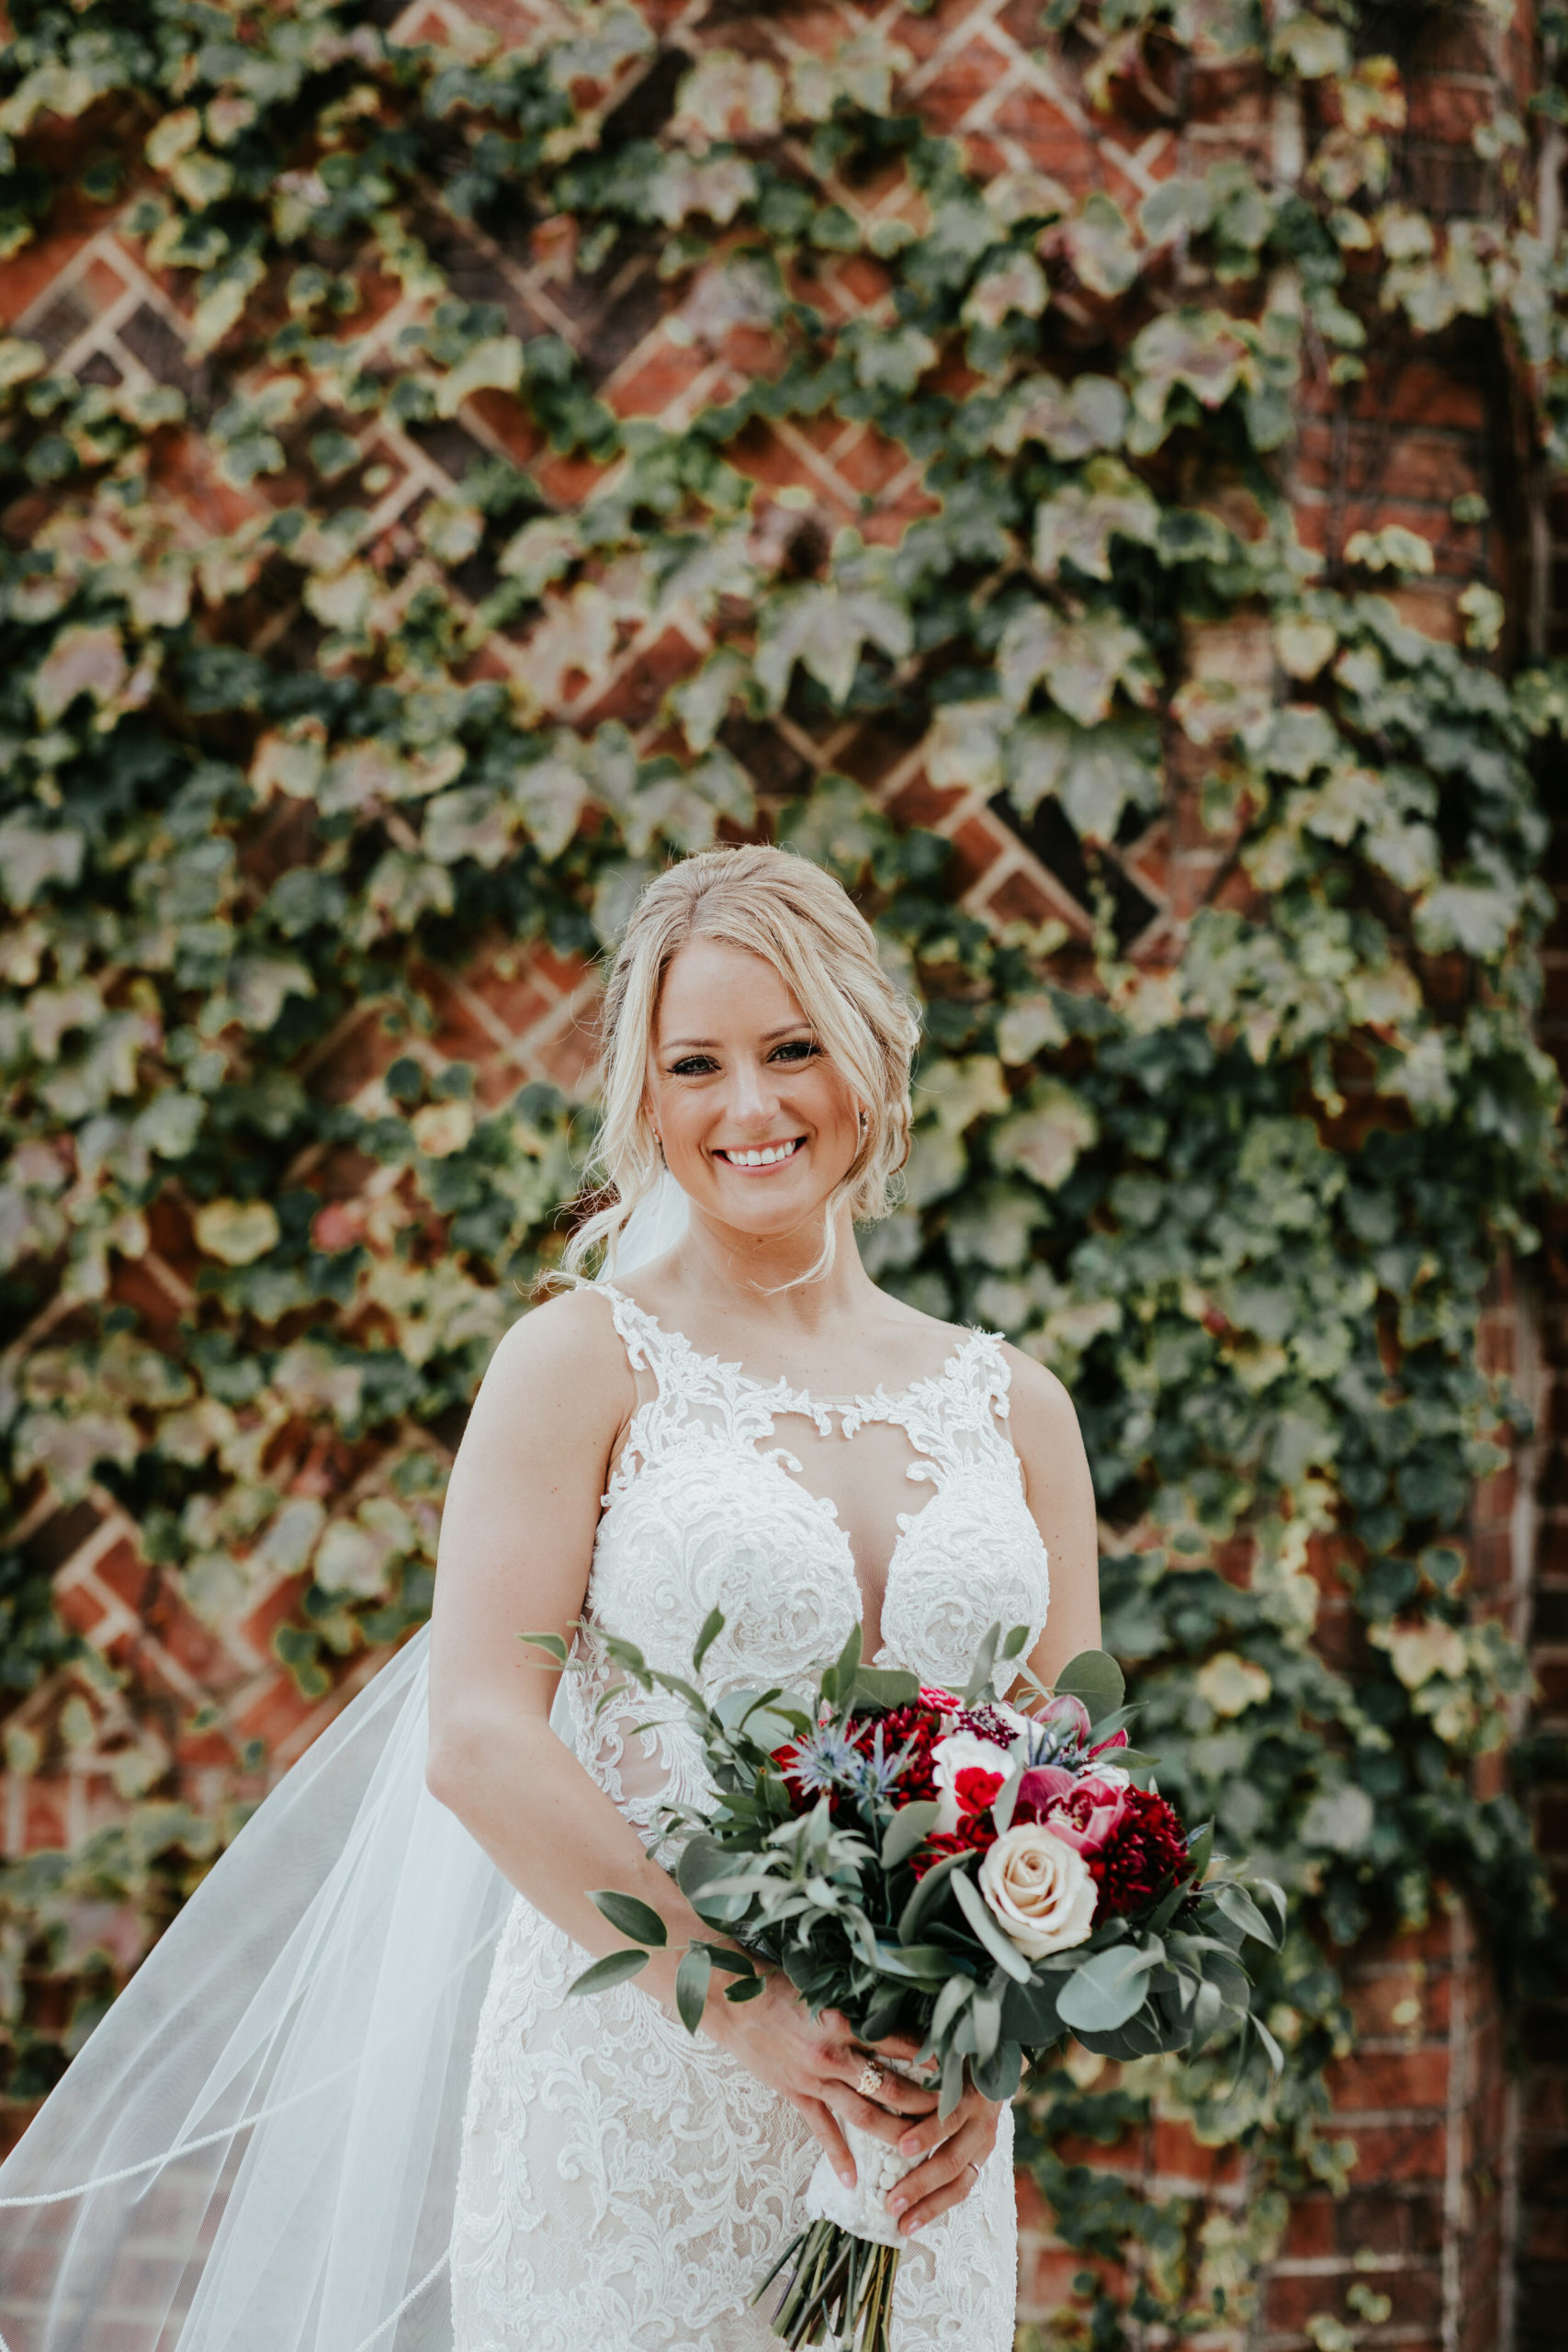 Bride + Groom Danielle Schury Photography Copyright 2019 (1).JPG